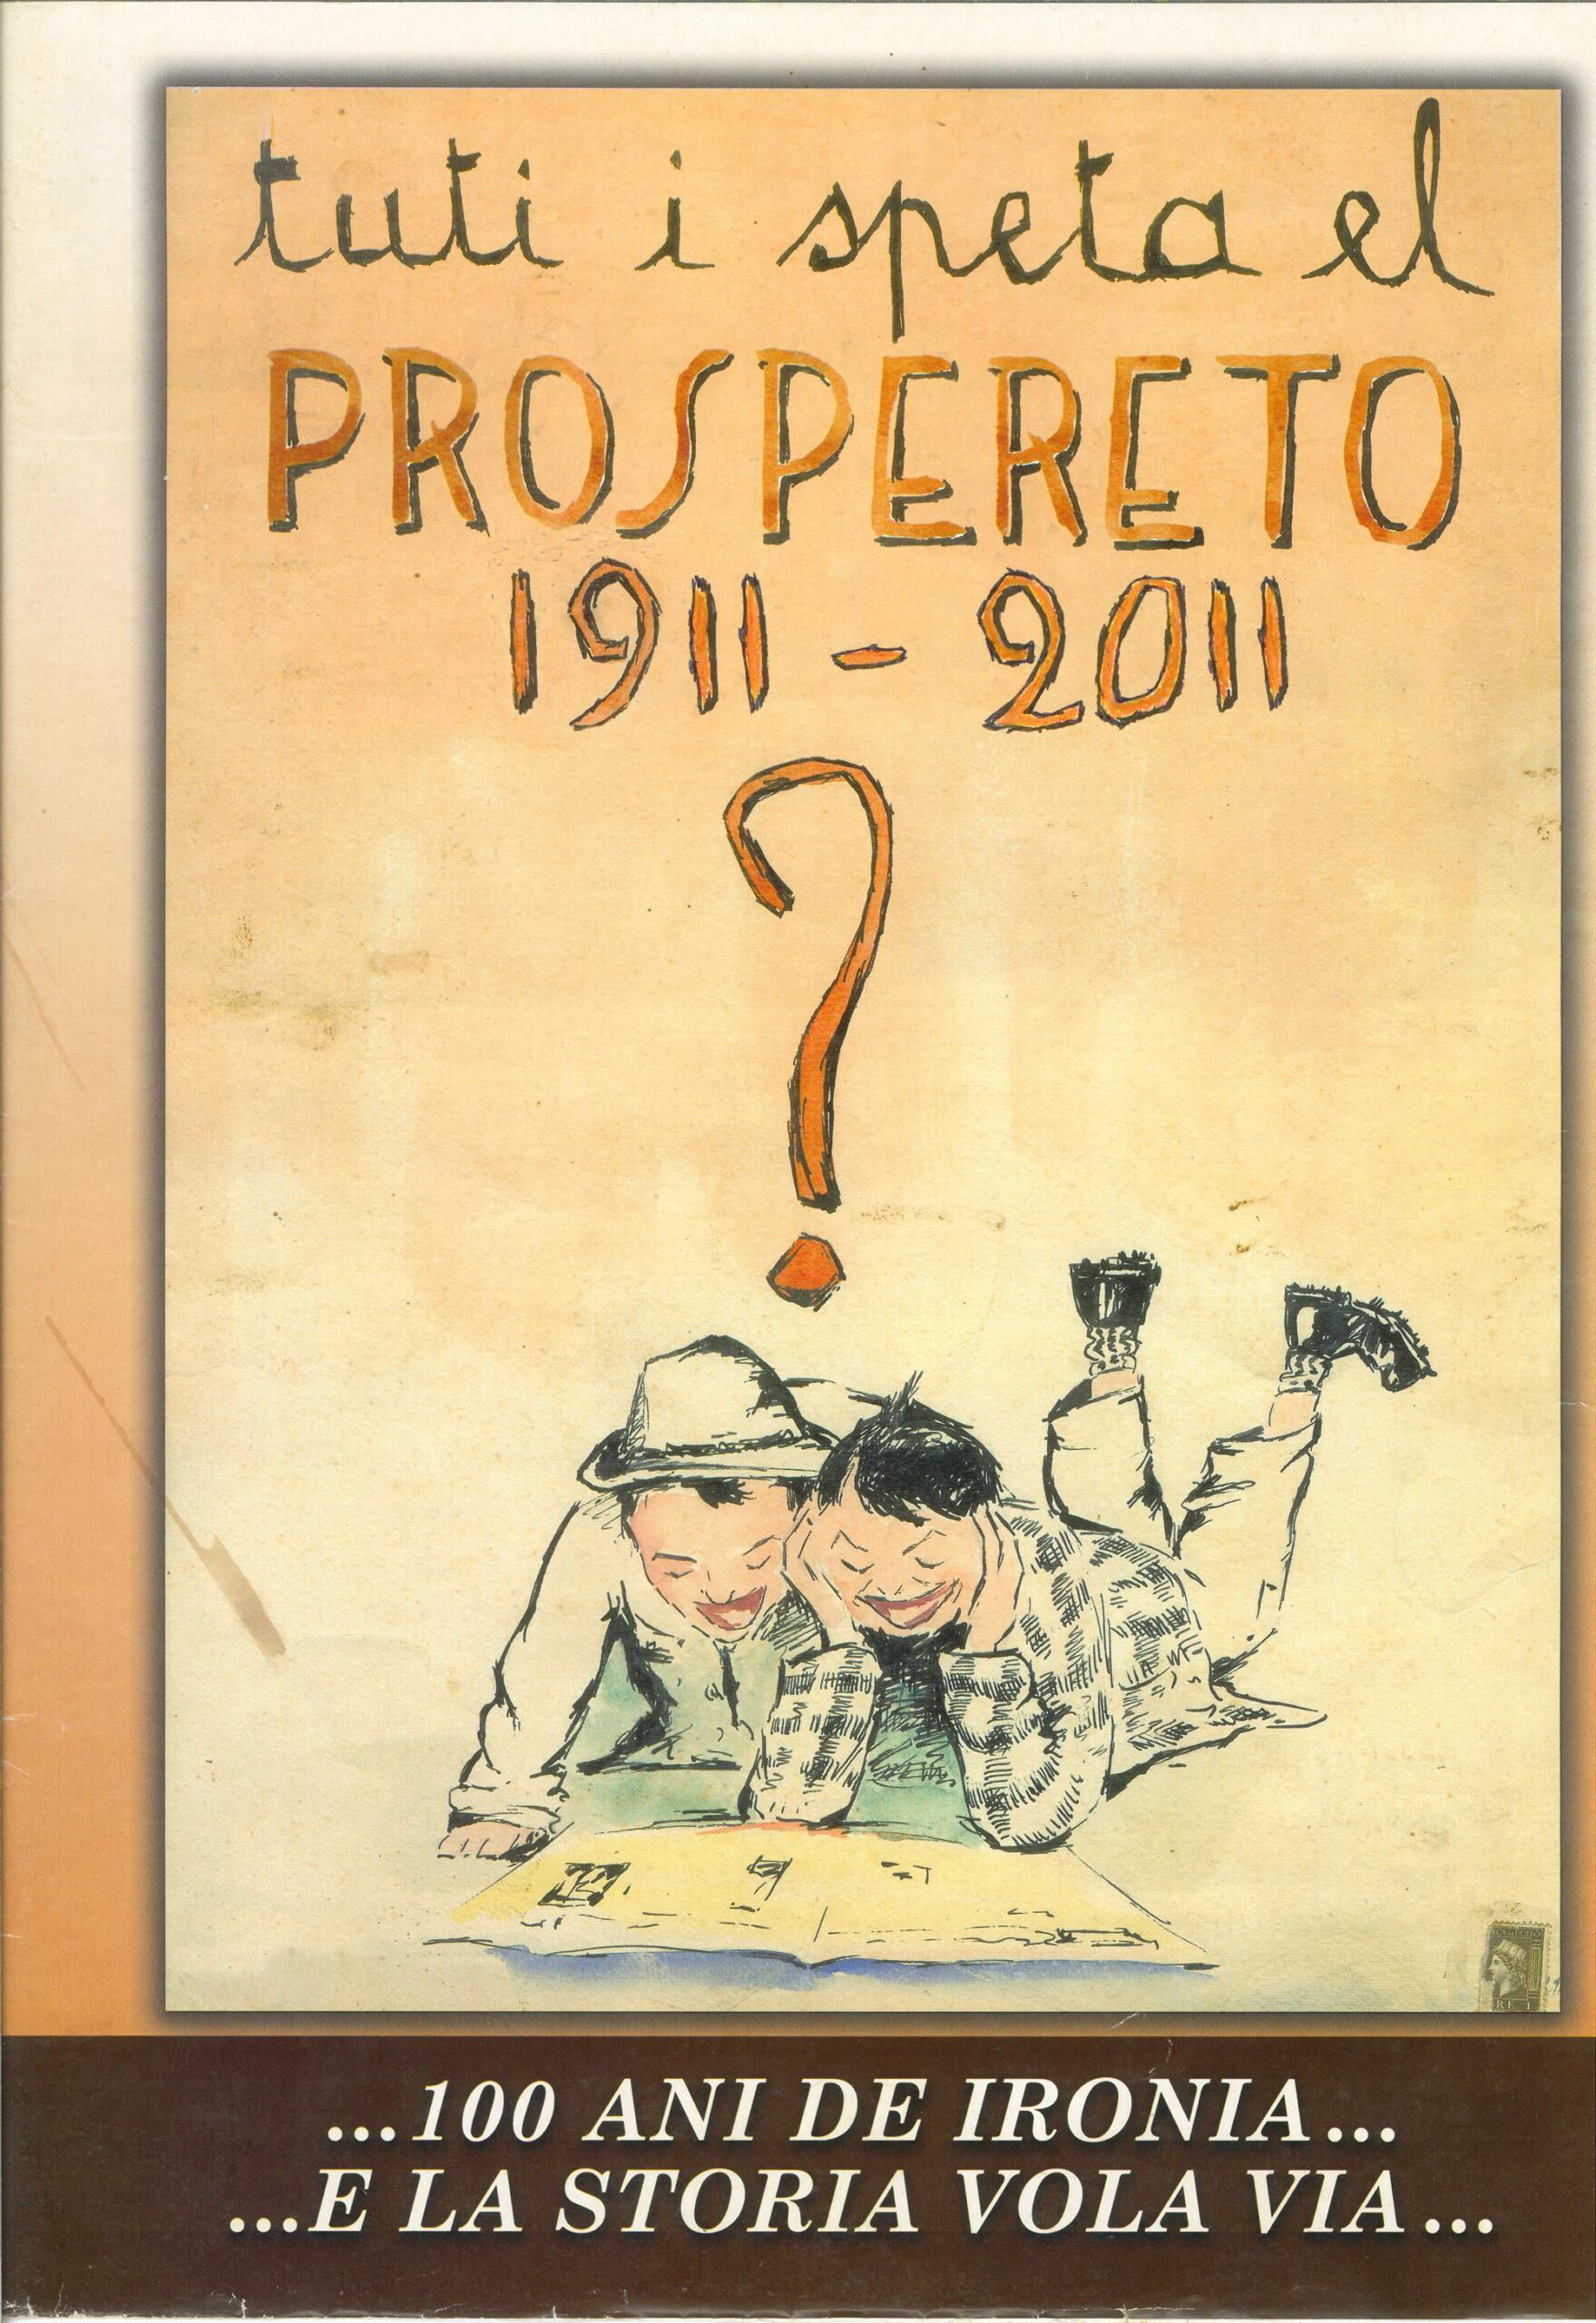 Tuti i speta el Prospereto 1911-2011